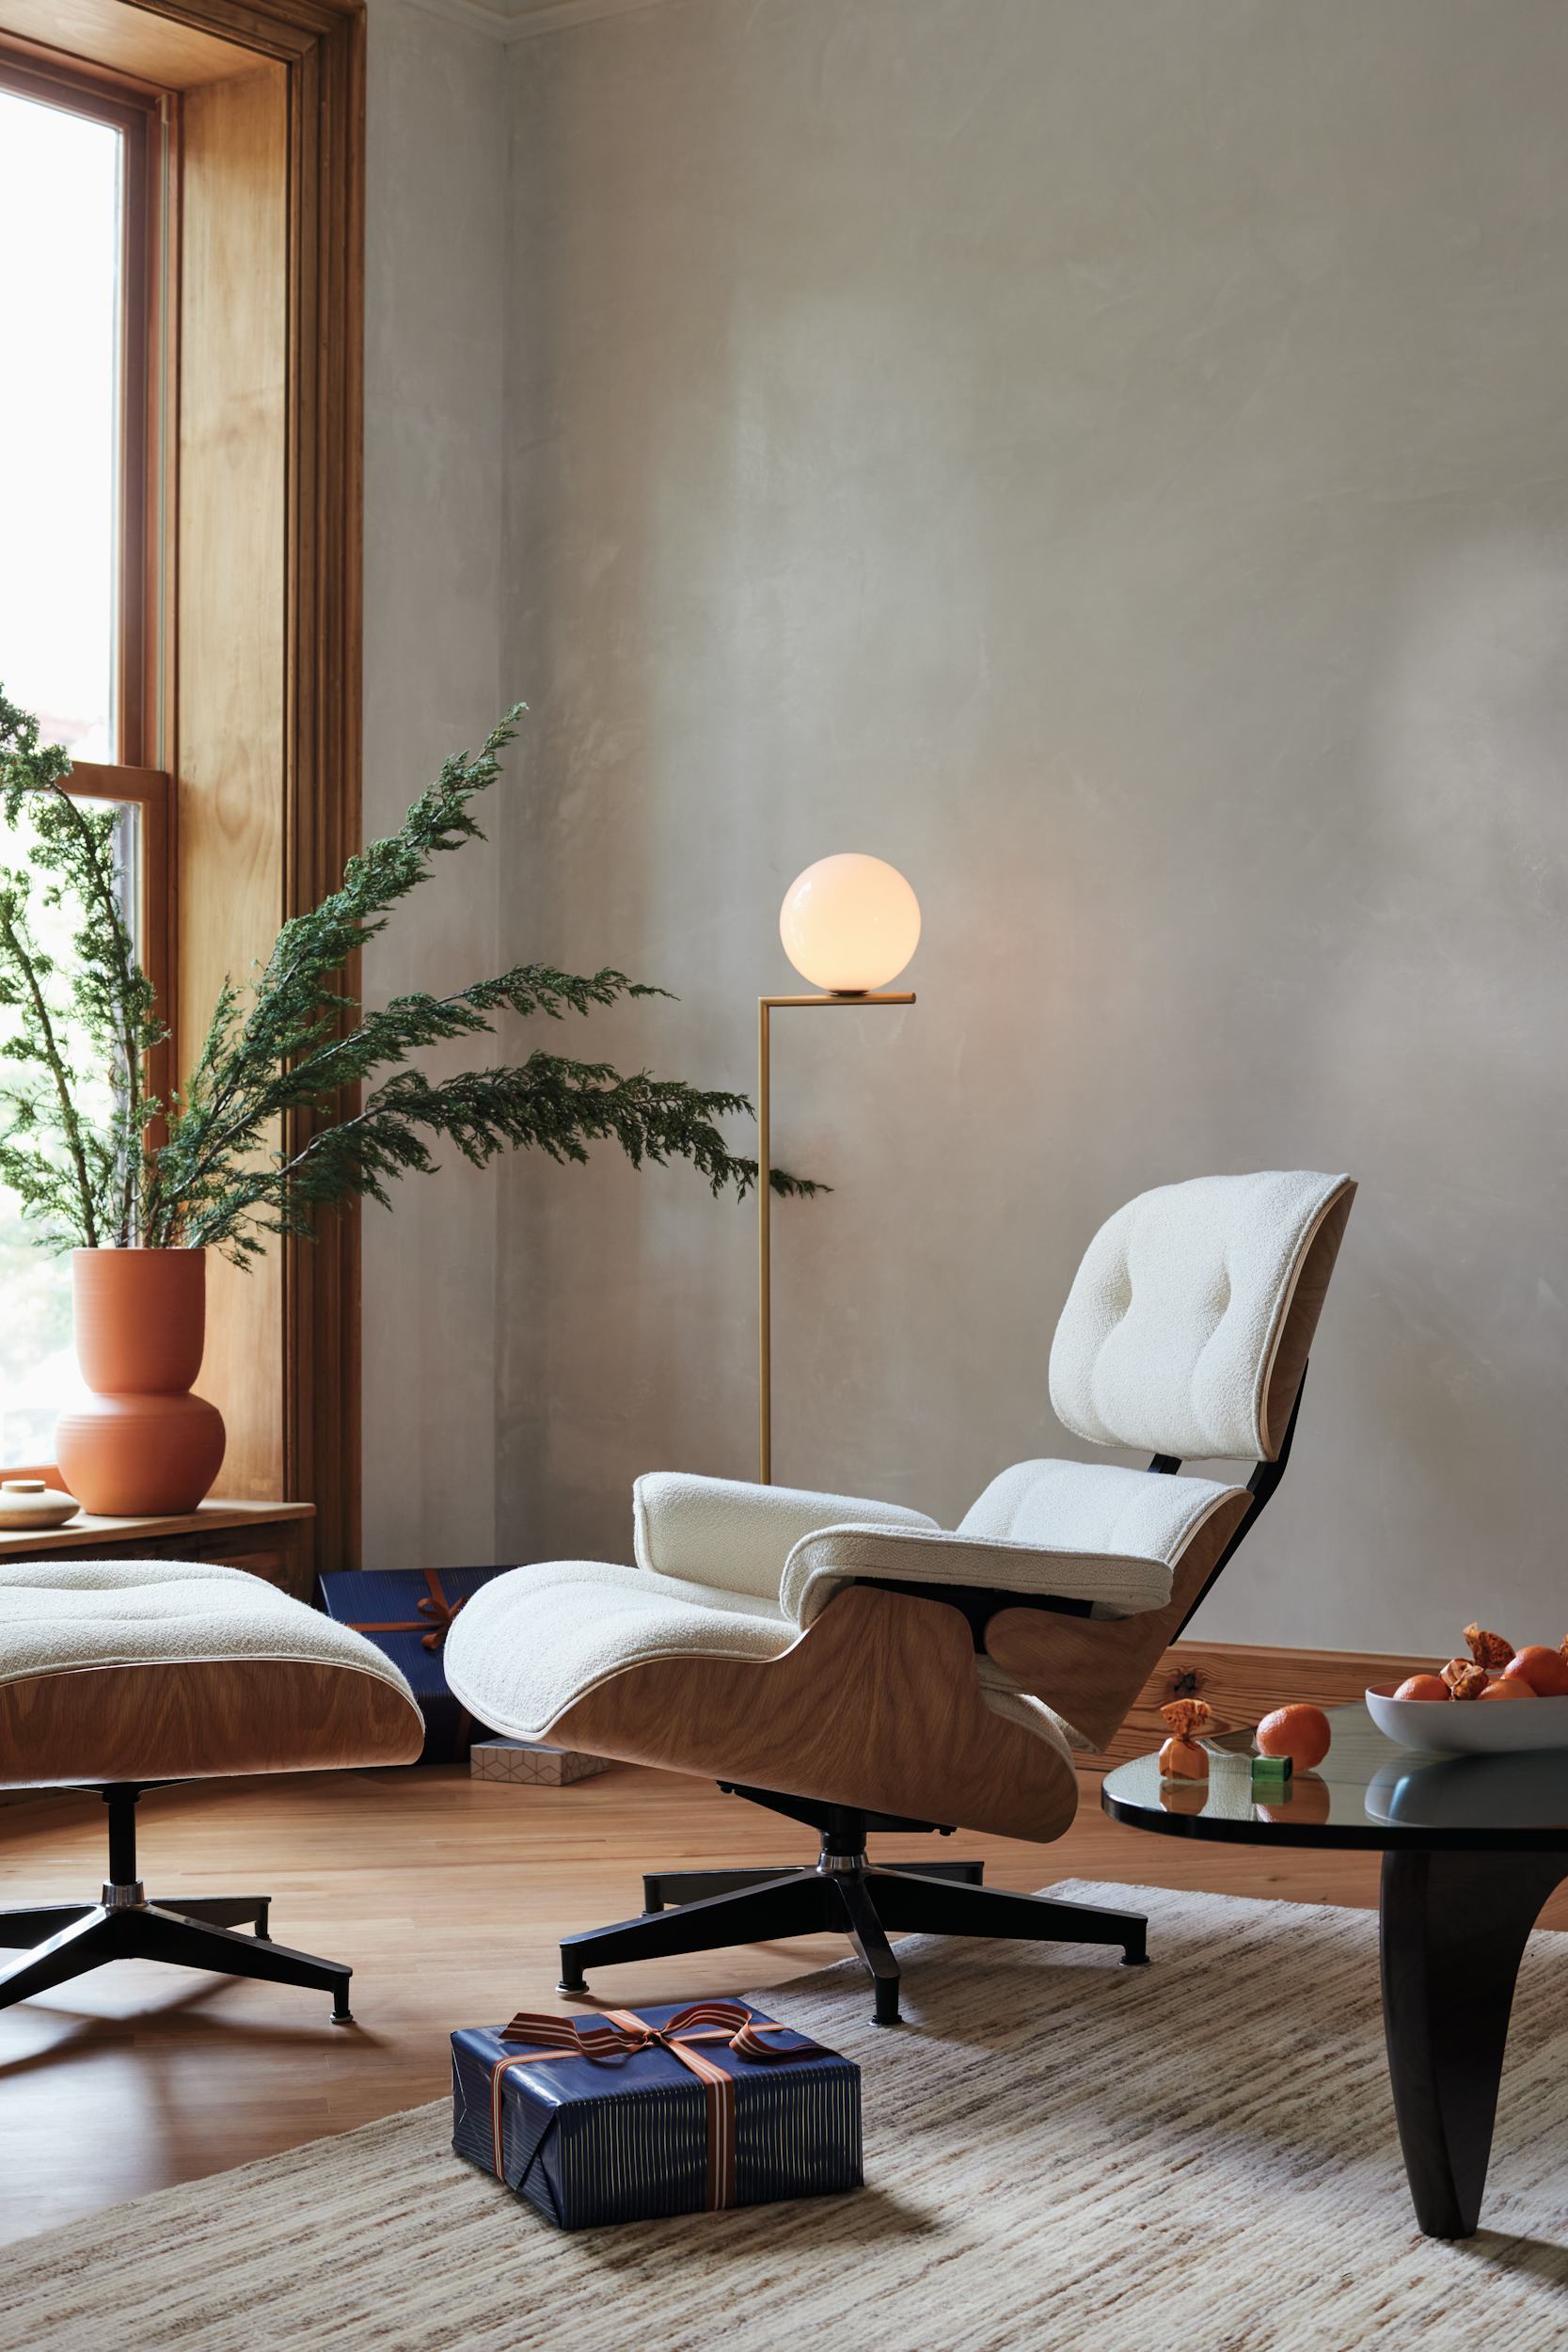 Herman Miller Eames Lounge Chair, Standard in Peat | Fabric